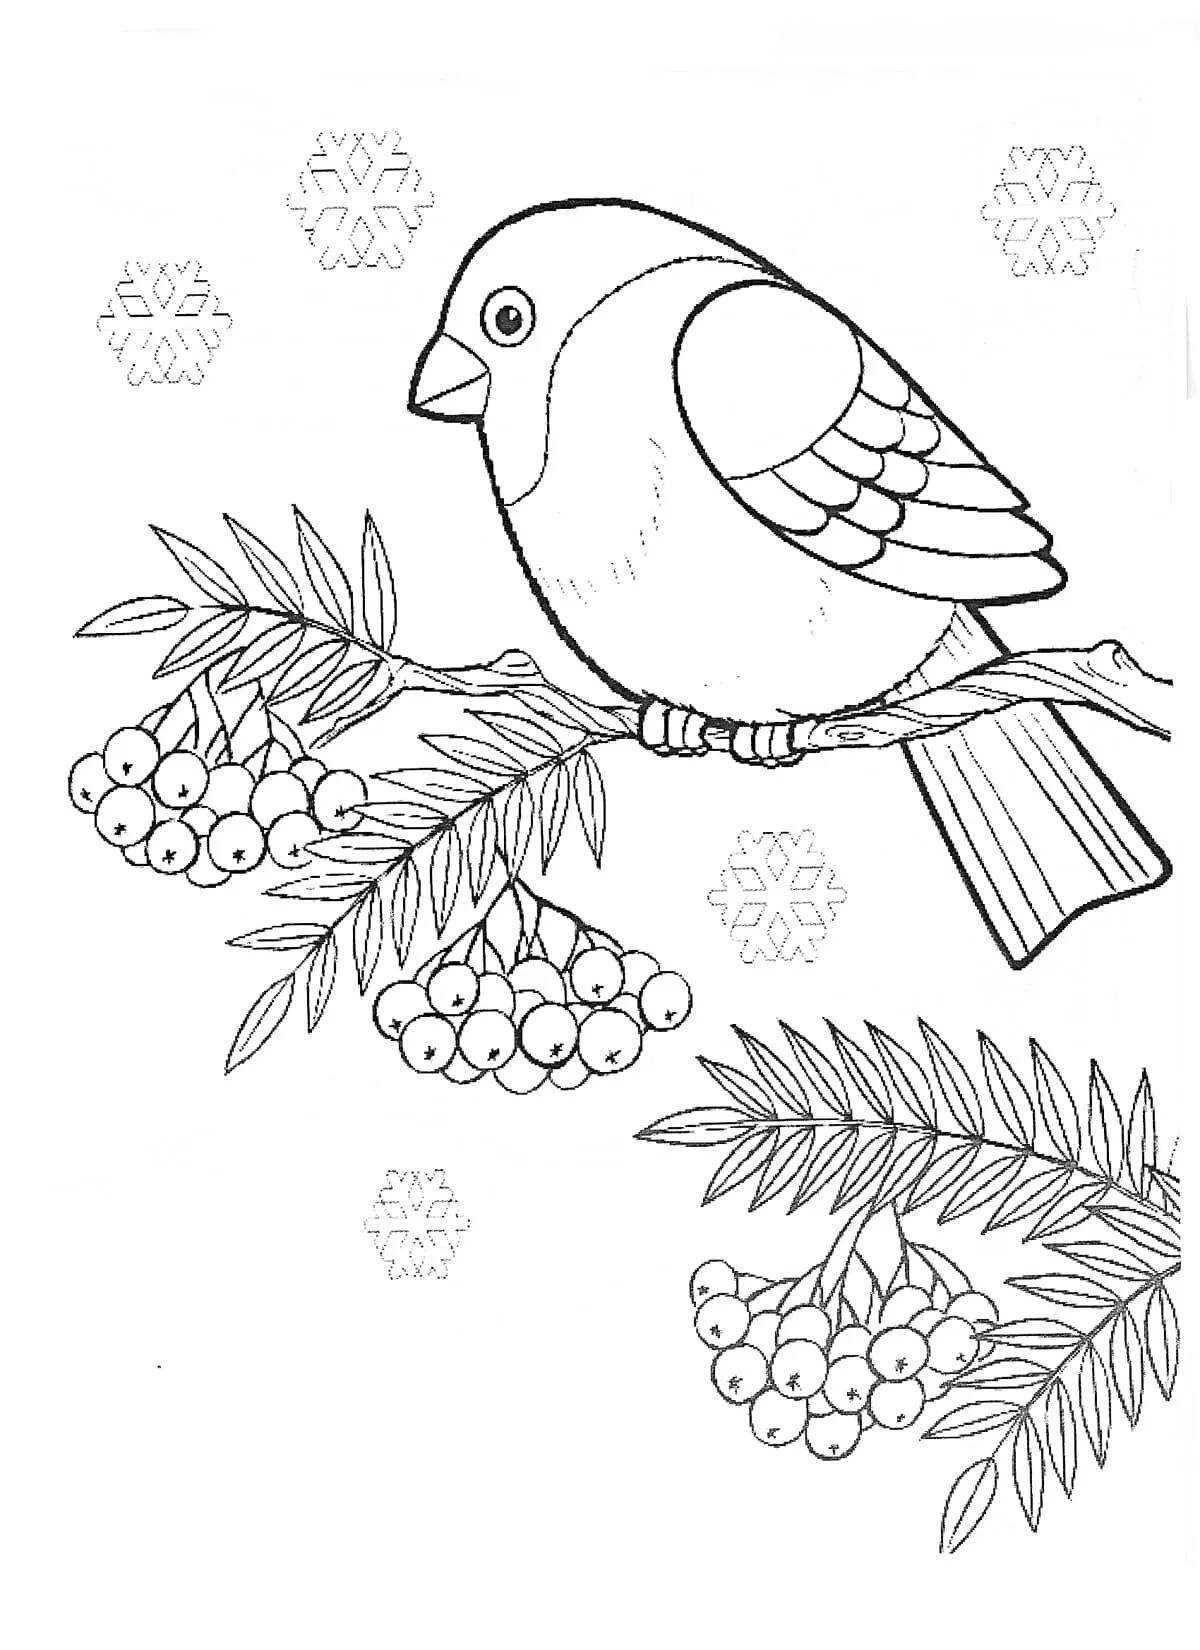 Drawing of a radiant bullfinch on a rowan branch